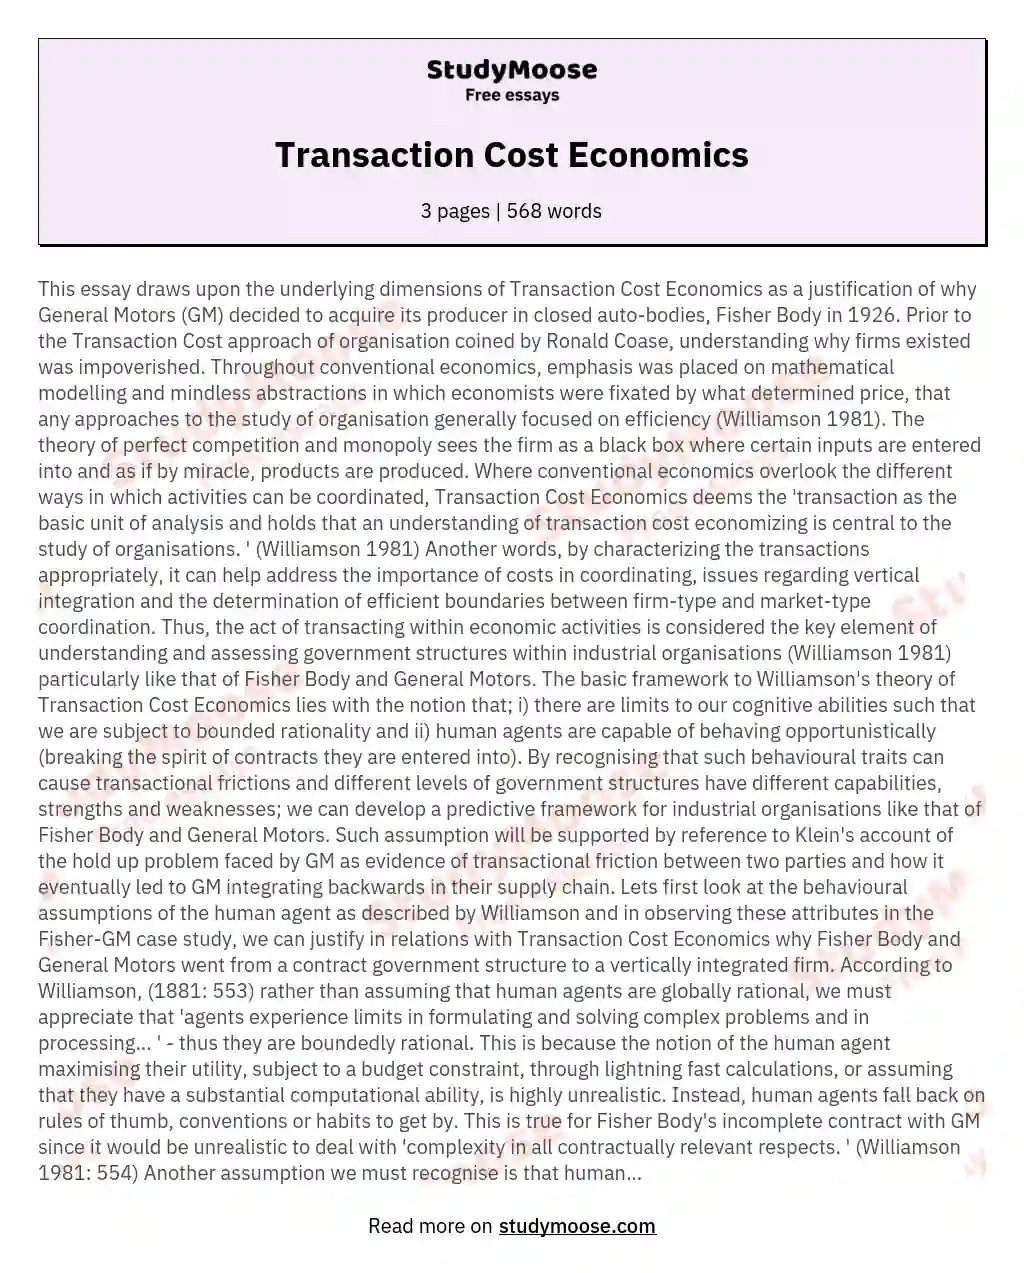 Transaction Cost Economics essay